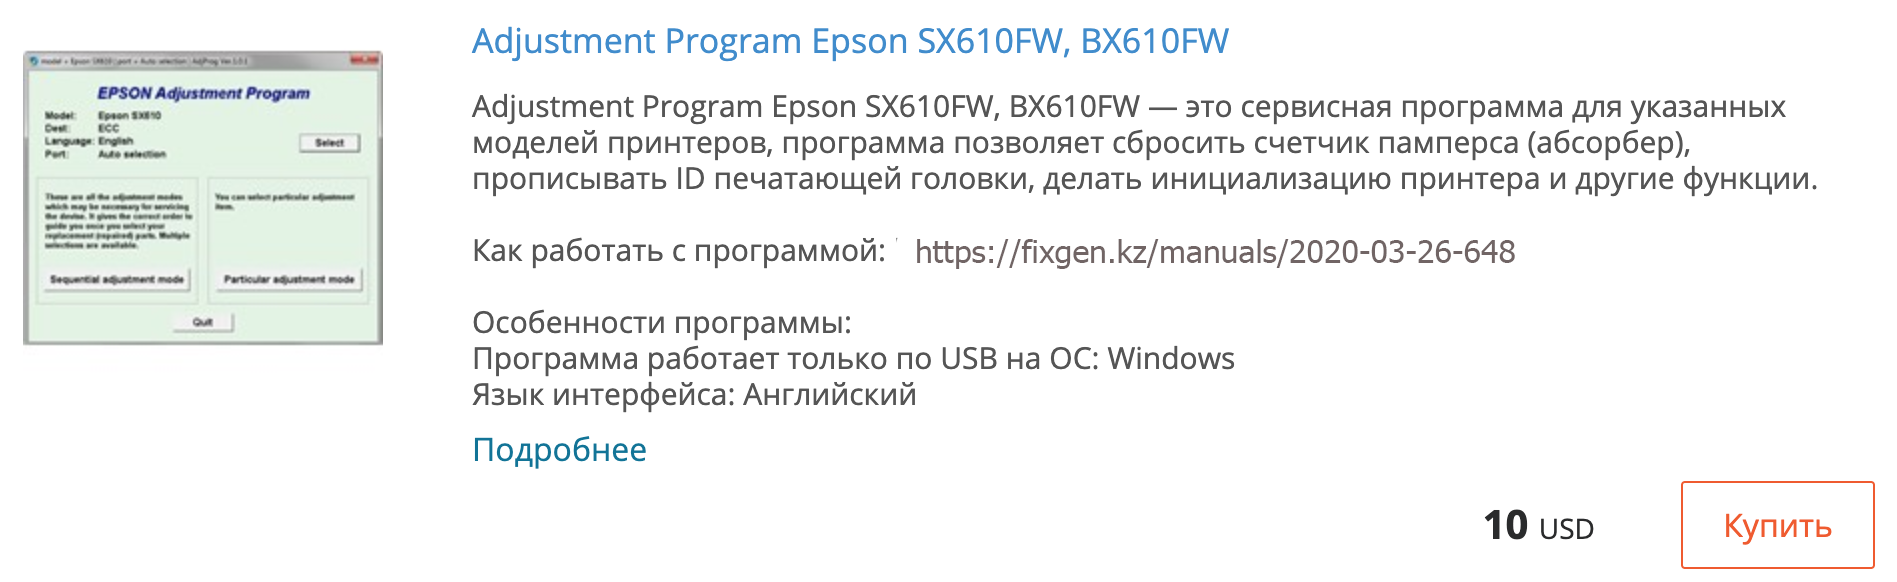 Купить Adjustment program Epson SX610FW, BX610FW